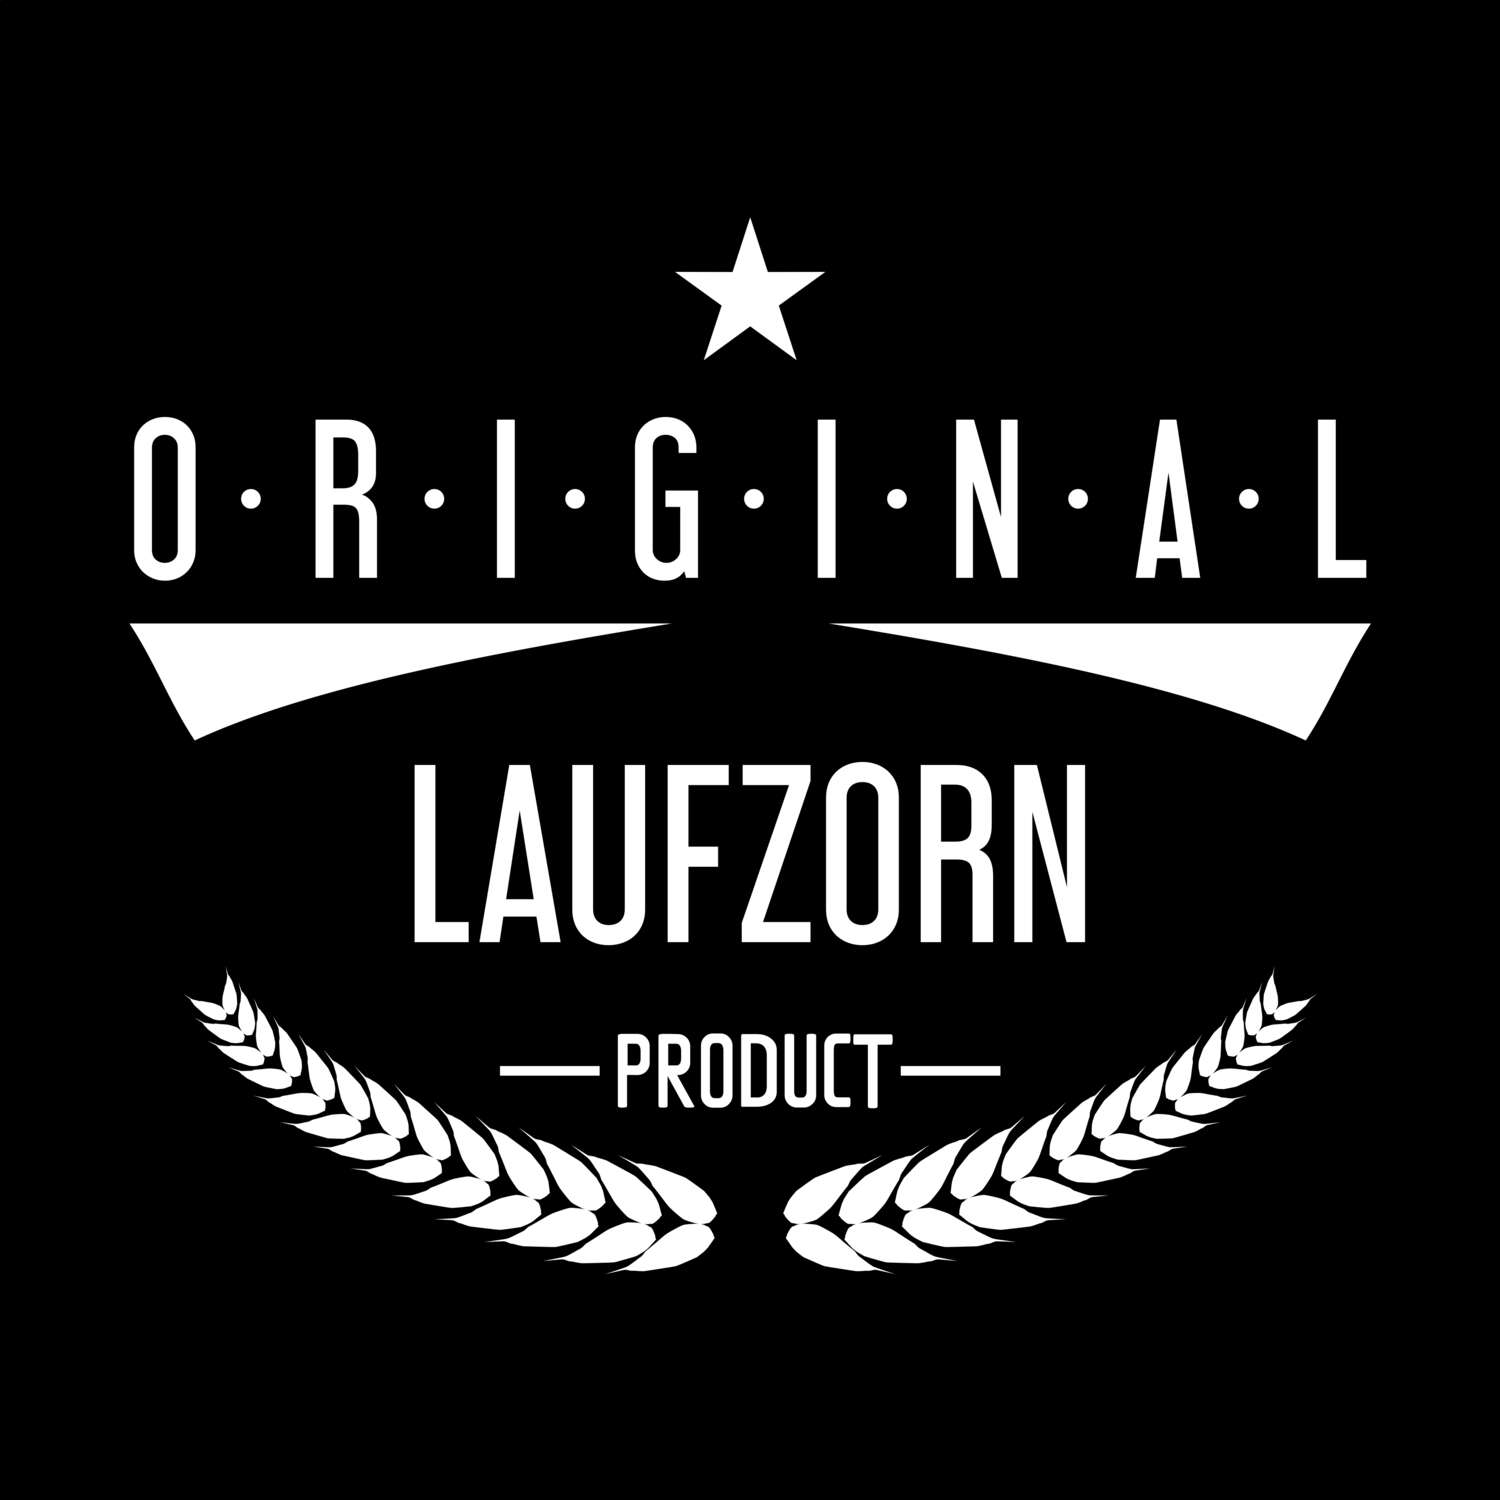 Laufzorn T-Shirt »Original Product«